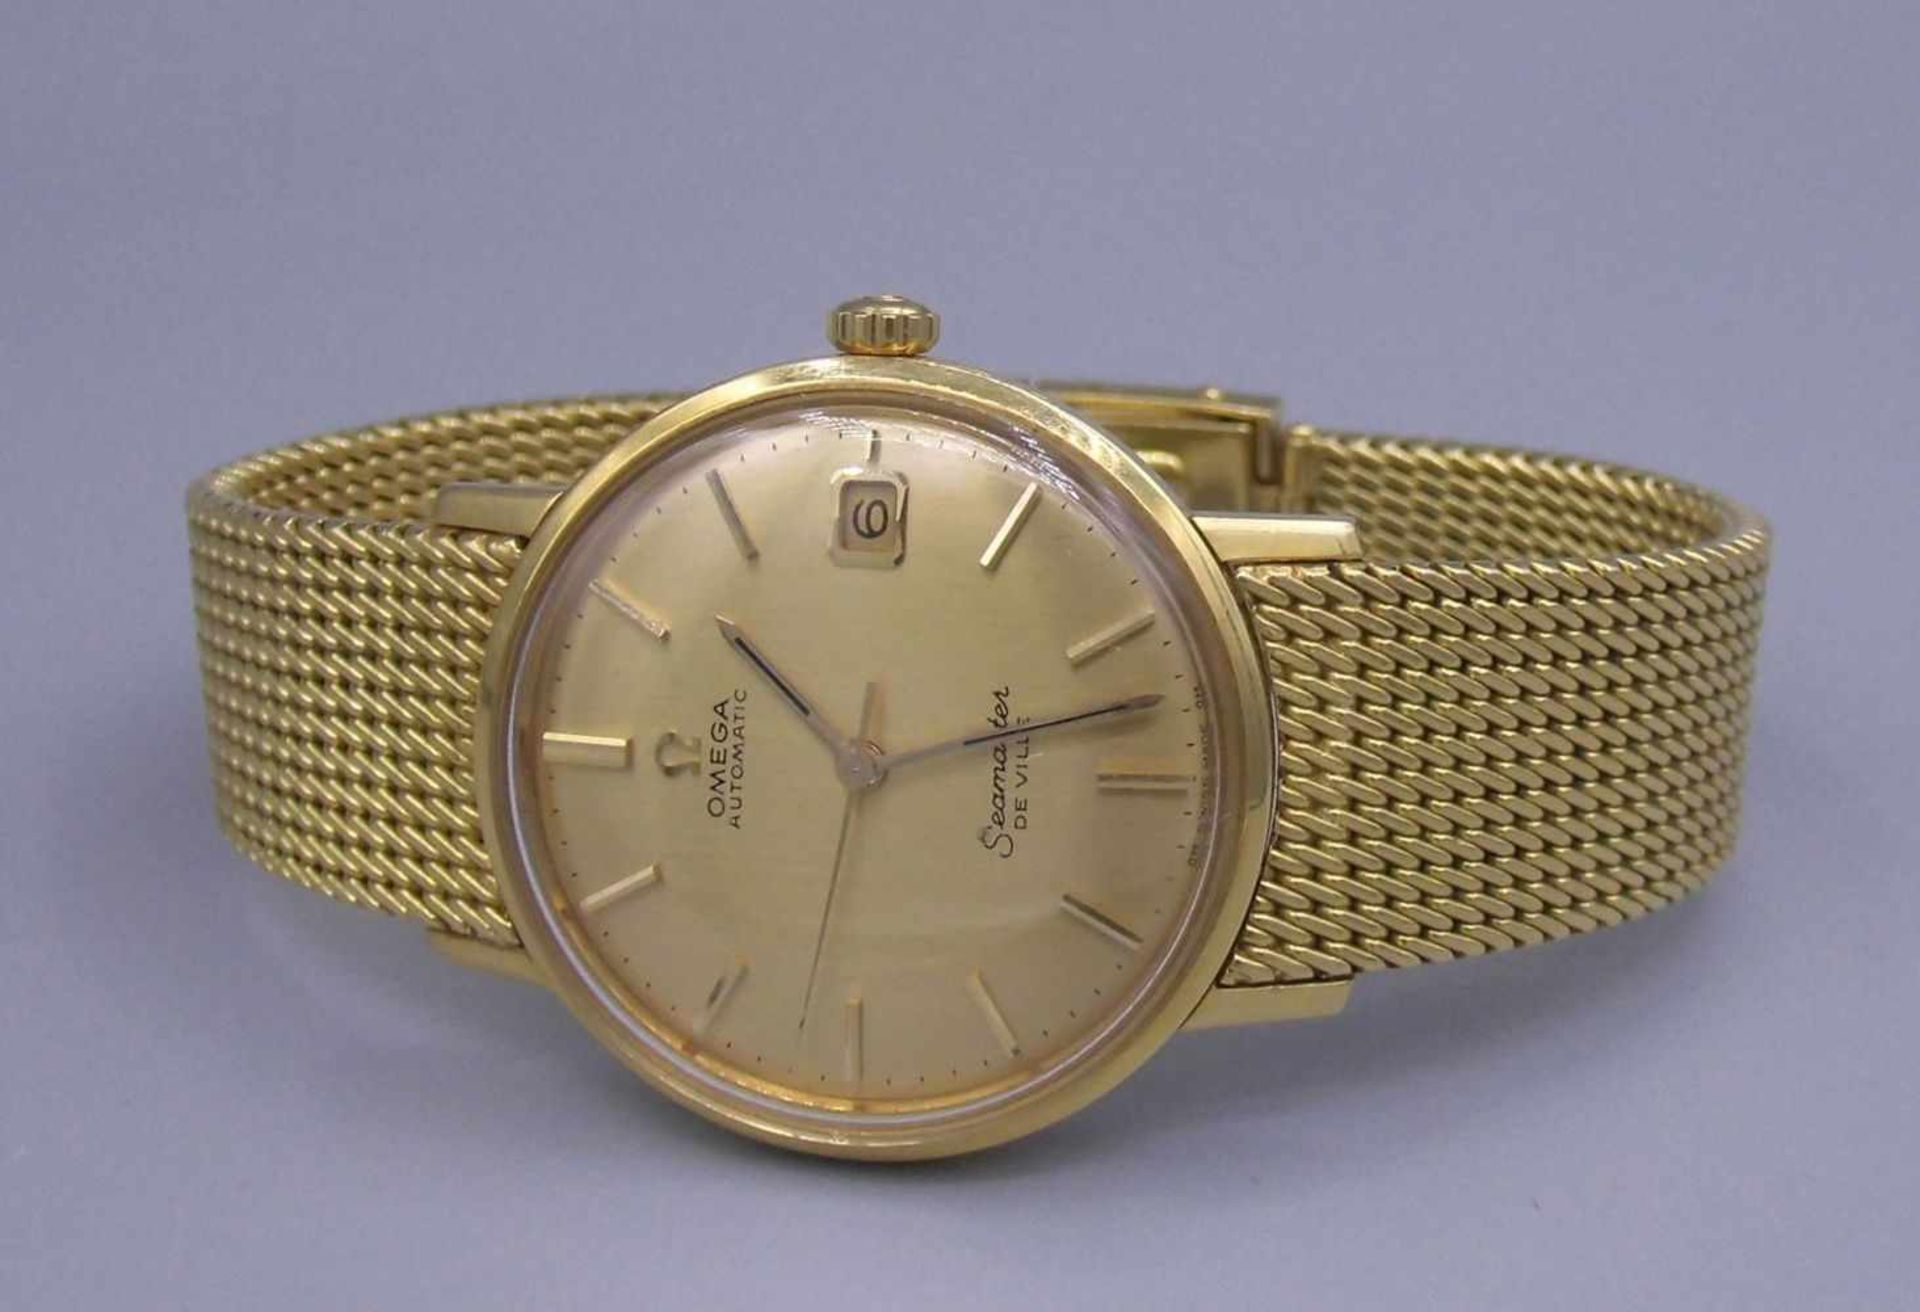 GOLDENE ARMBANDUHR / wristwatch, Automatik-Uhr, Manufaktur Omega, Modell "Seamaster De Ville". - Image 3 of 7